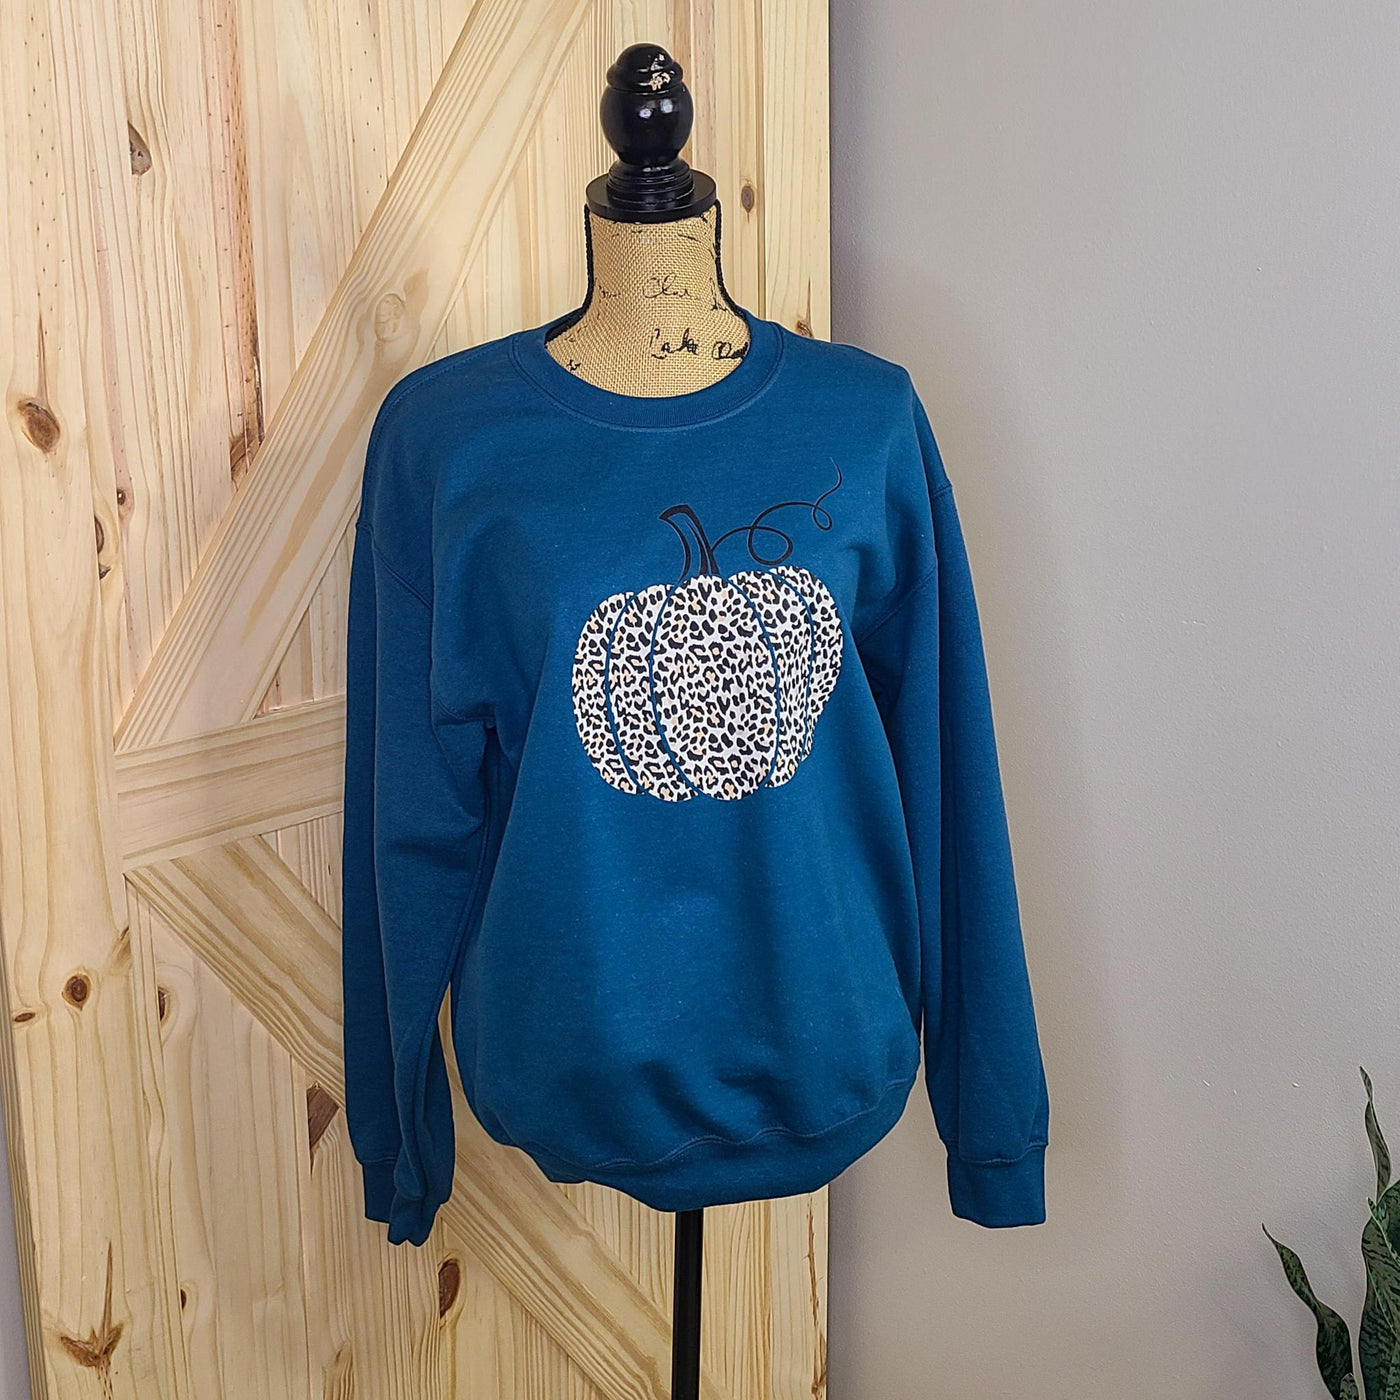 Leopard Pumpkin Sweatshirt